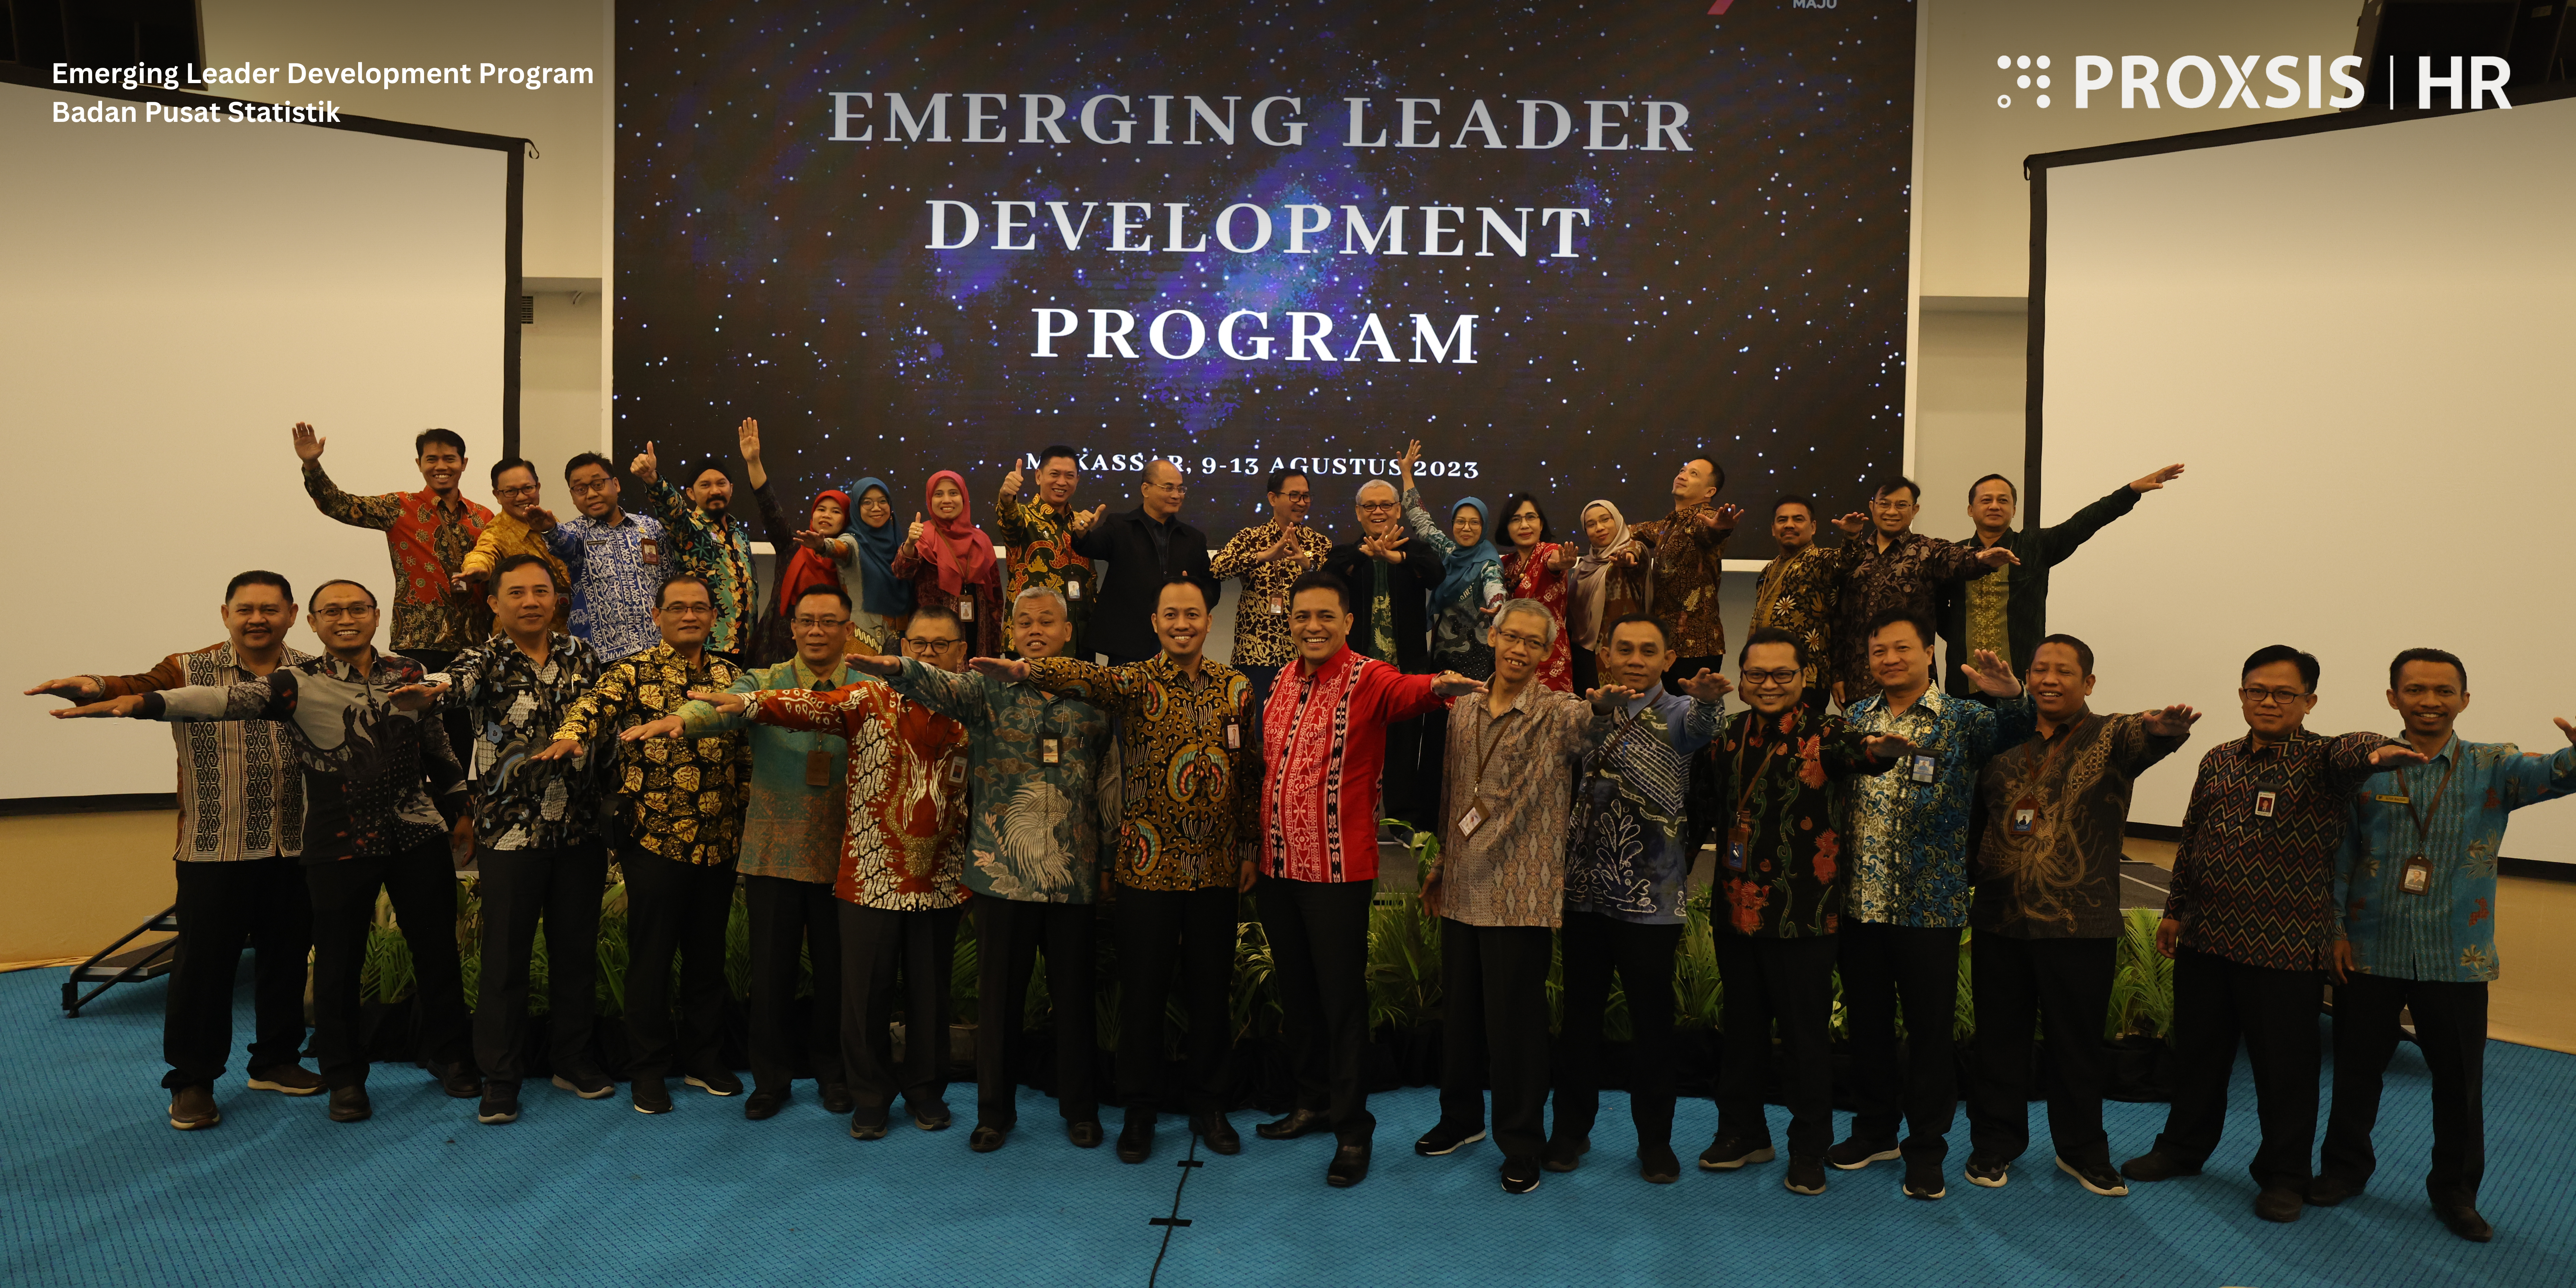 Badan Pusat Statistik - Emerging Leader Development Program